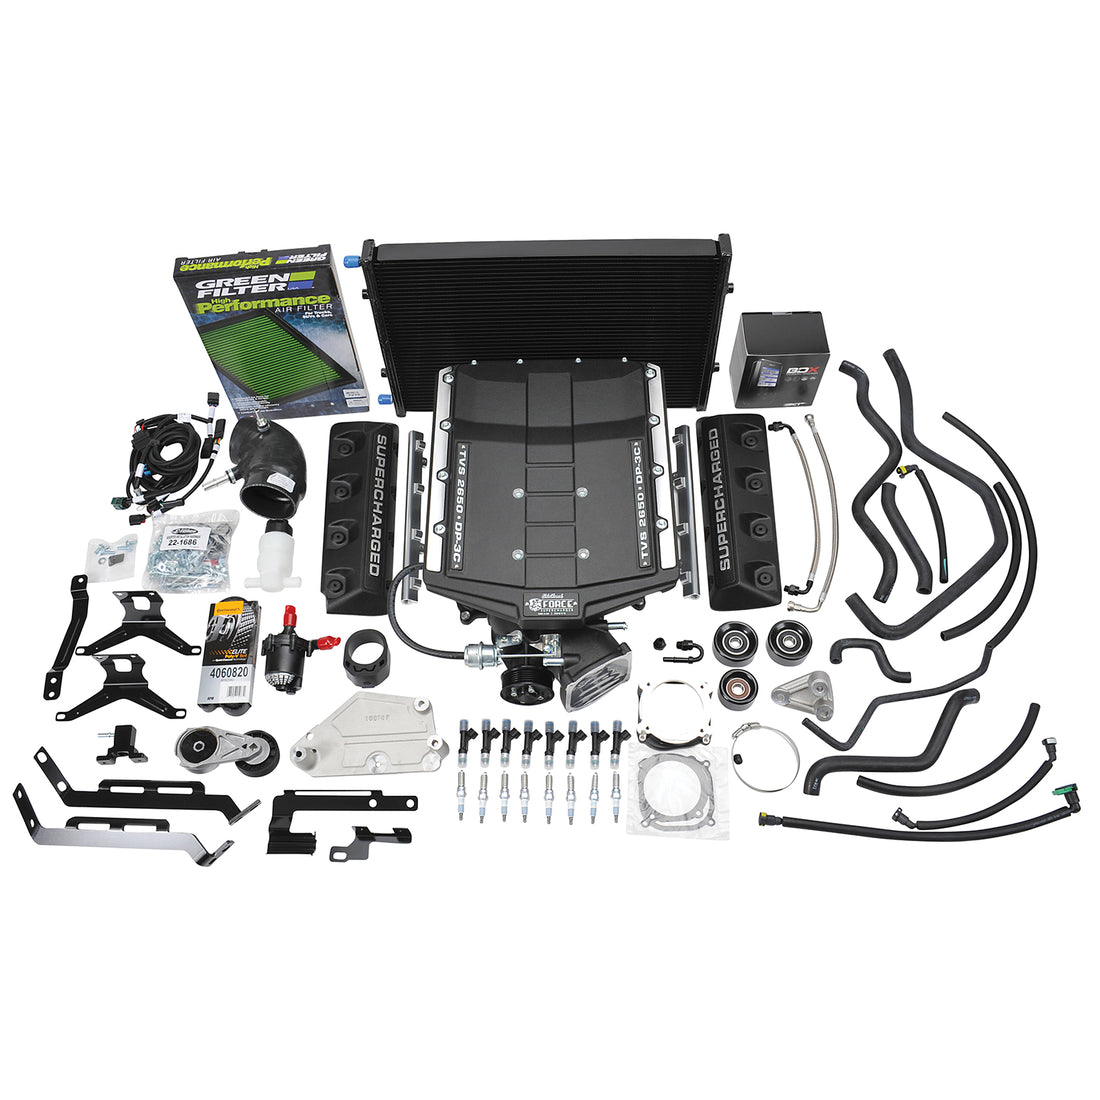 Edelbrock Stage 1 Supercharger Kit #15838 For 2015-17 Ford Mustang 5.0L W/ Tune Edelbrock